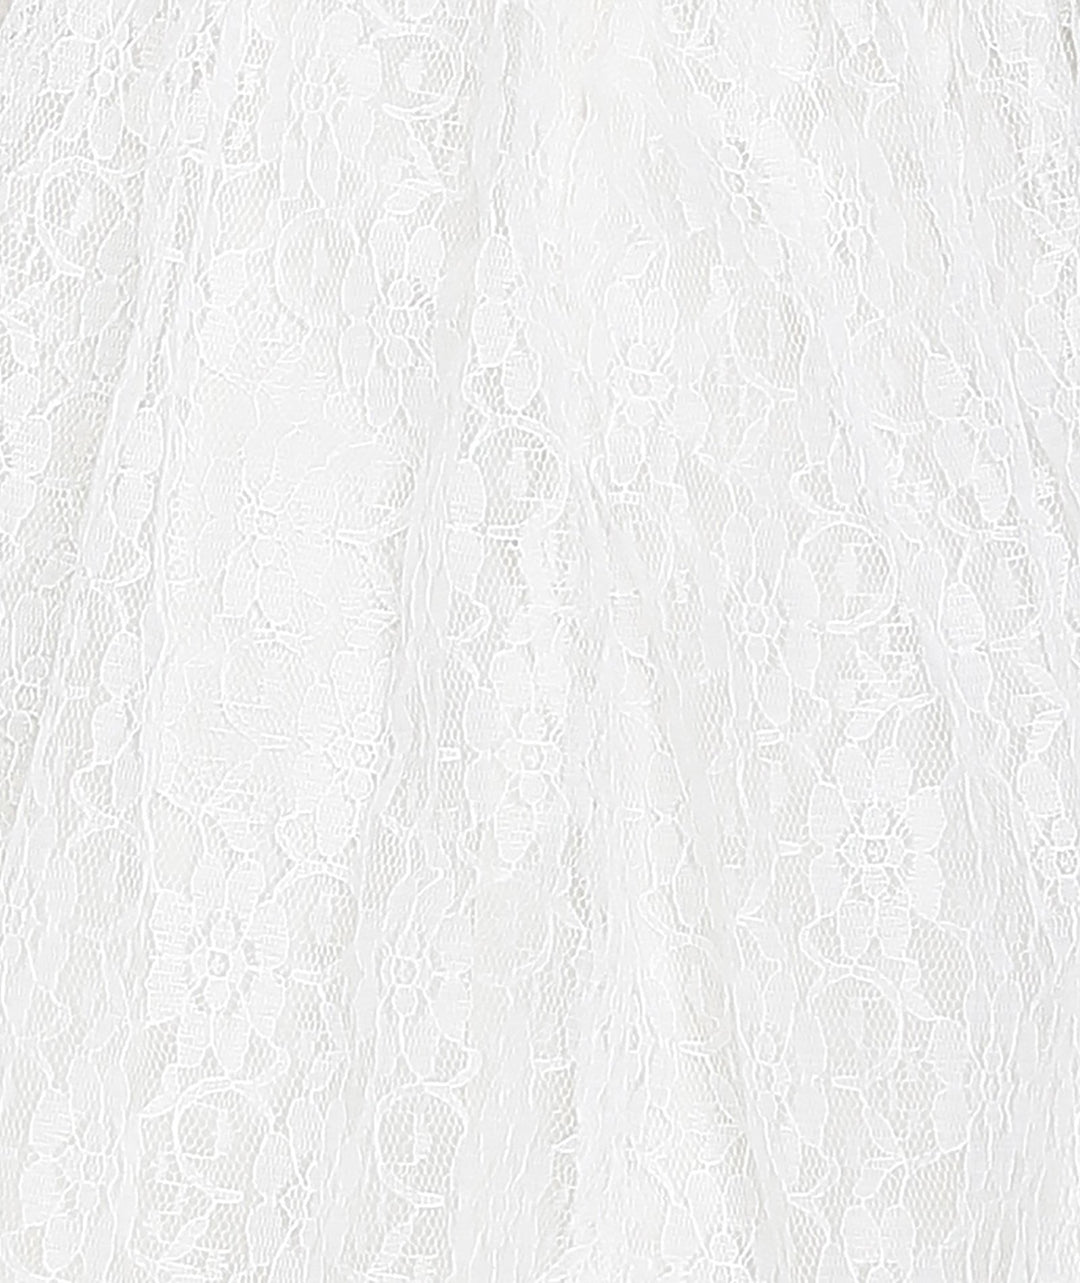 White Lace Short Gathered Dress